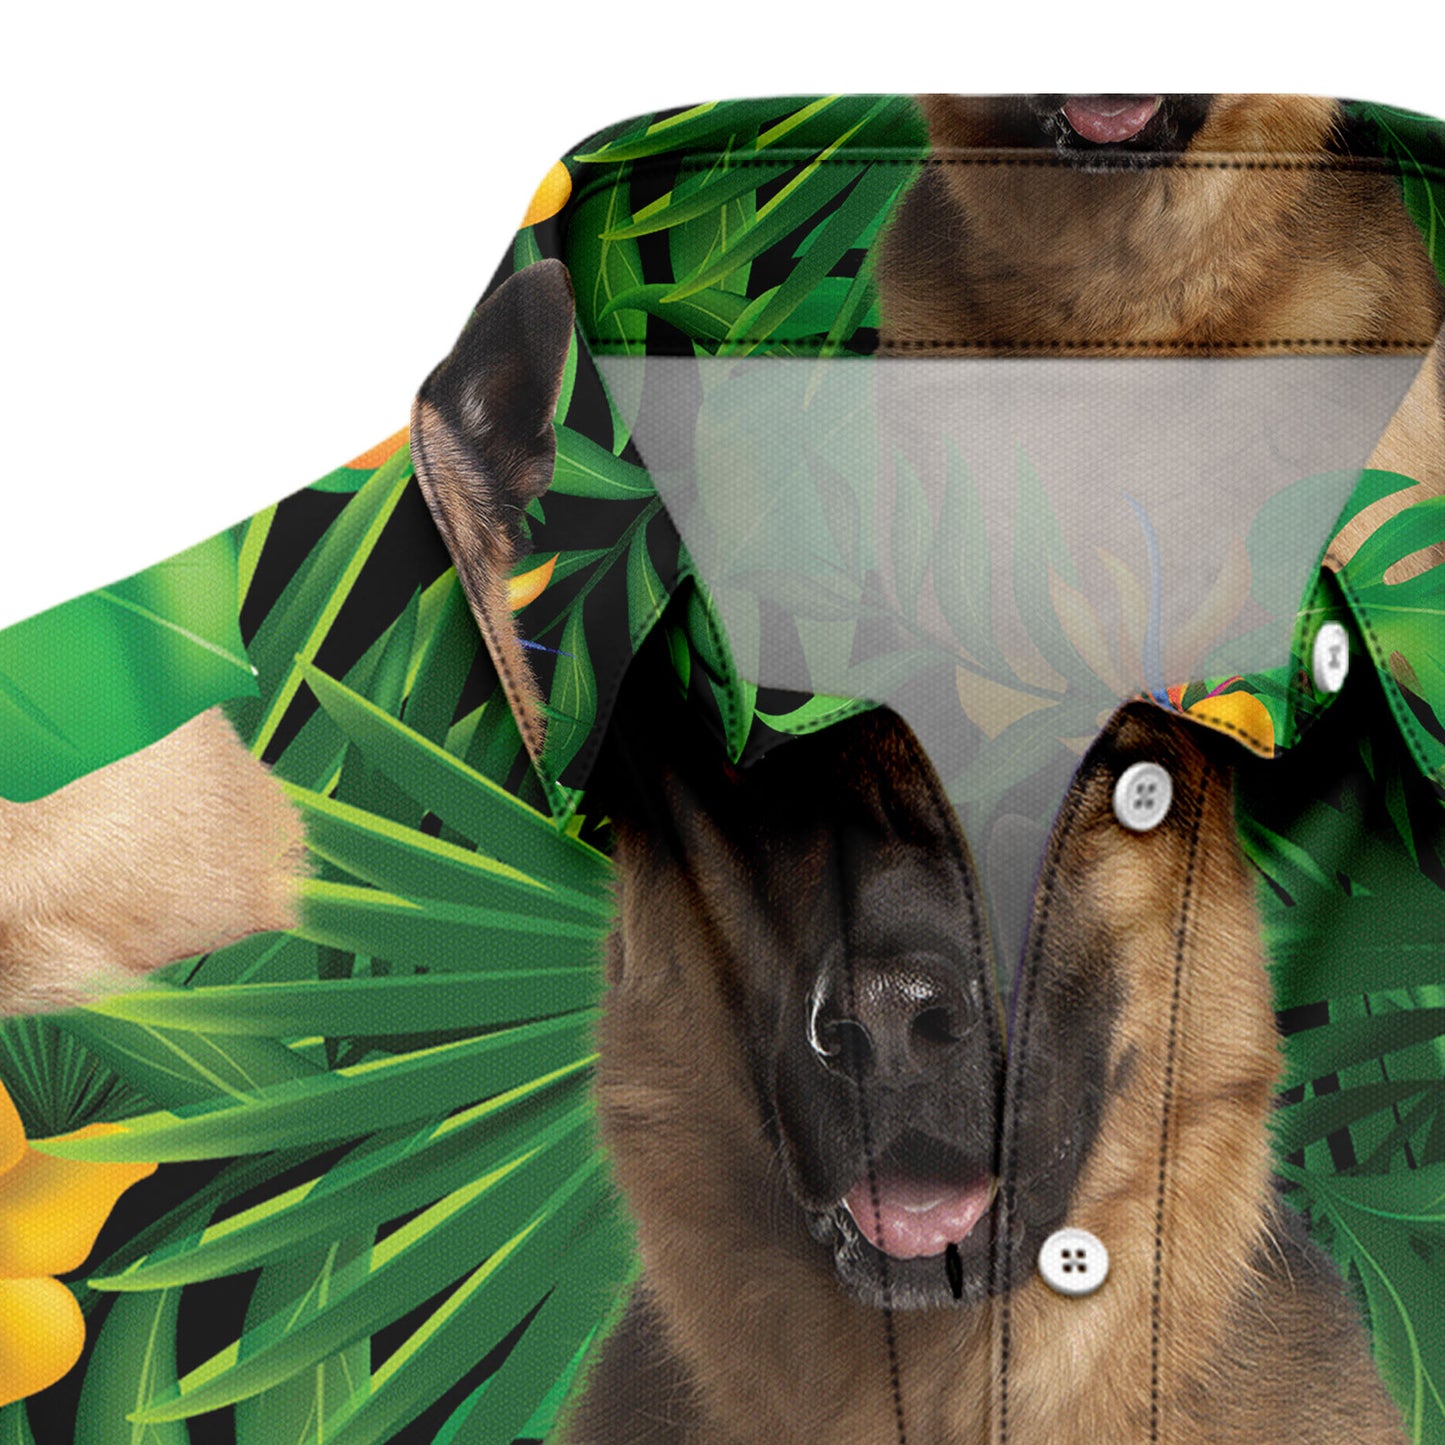 German Shepherd Tropical Wild Flower T0807 Hawaiian Shirt